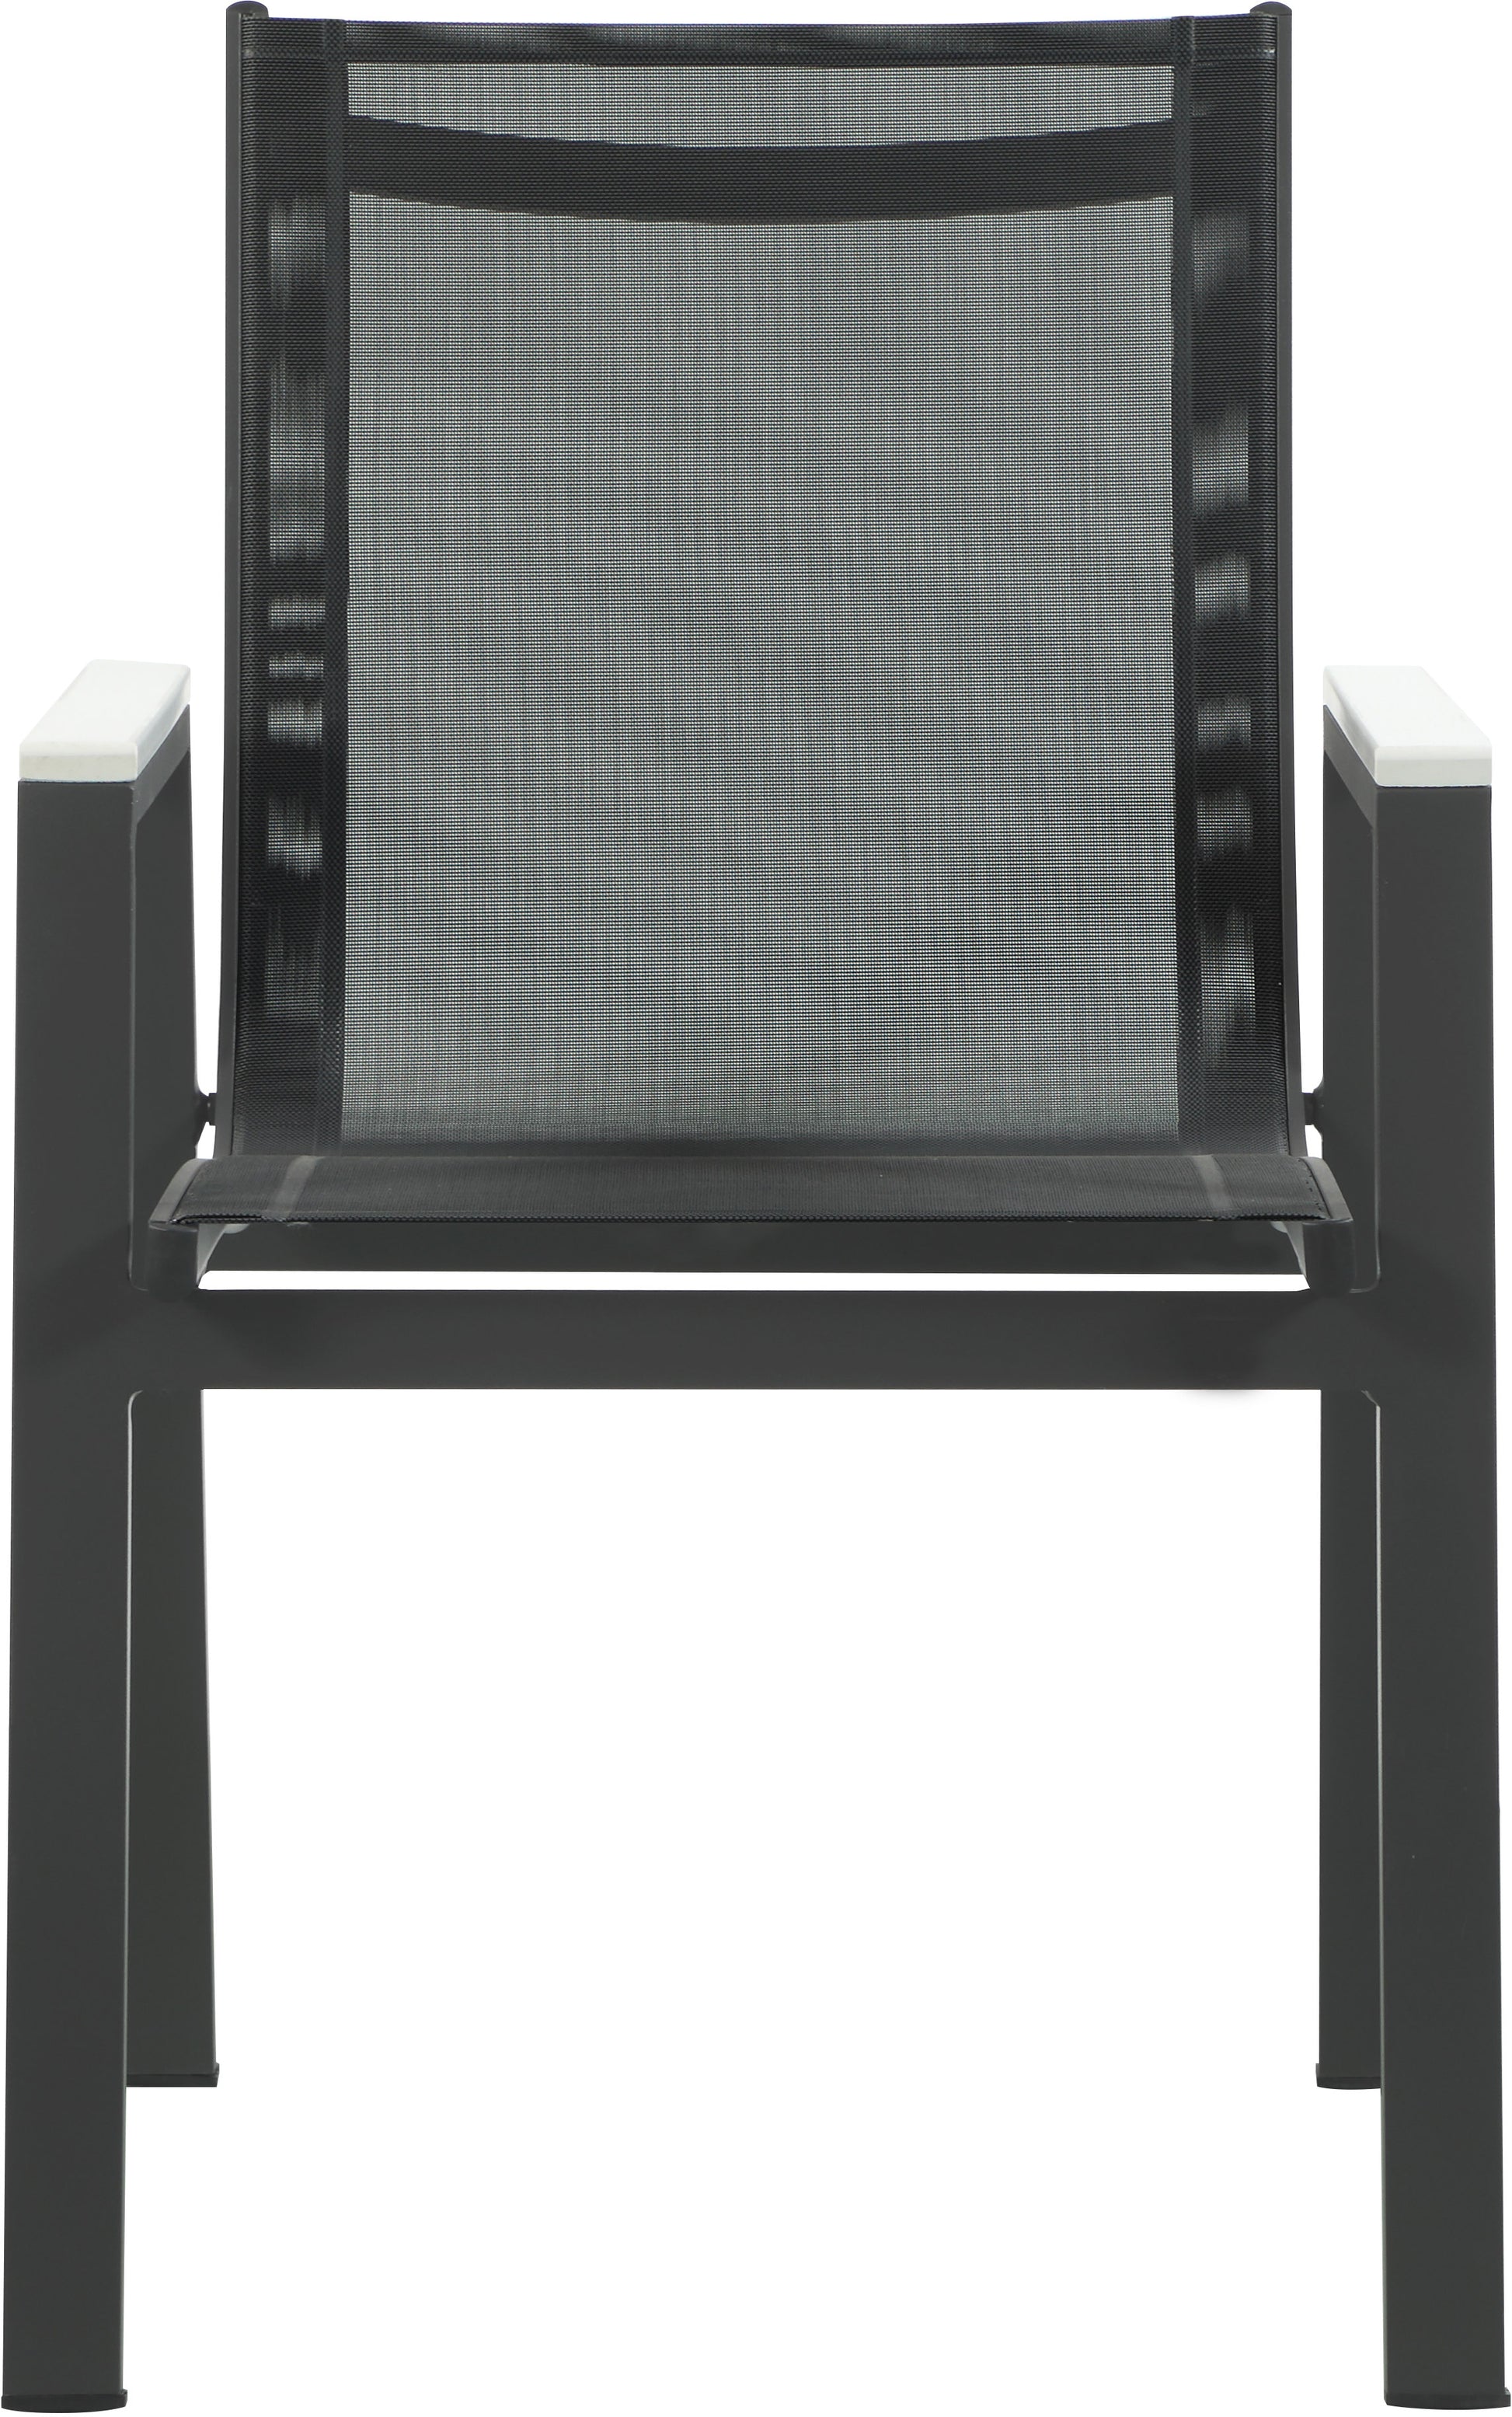 Outdoor Patio Aluminum Mesh Dining Arm Chair